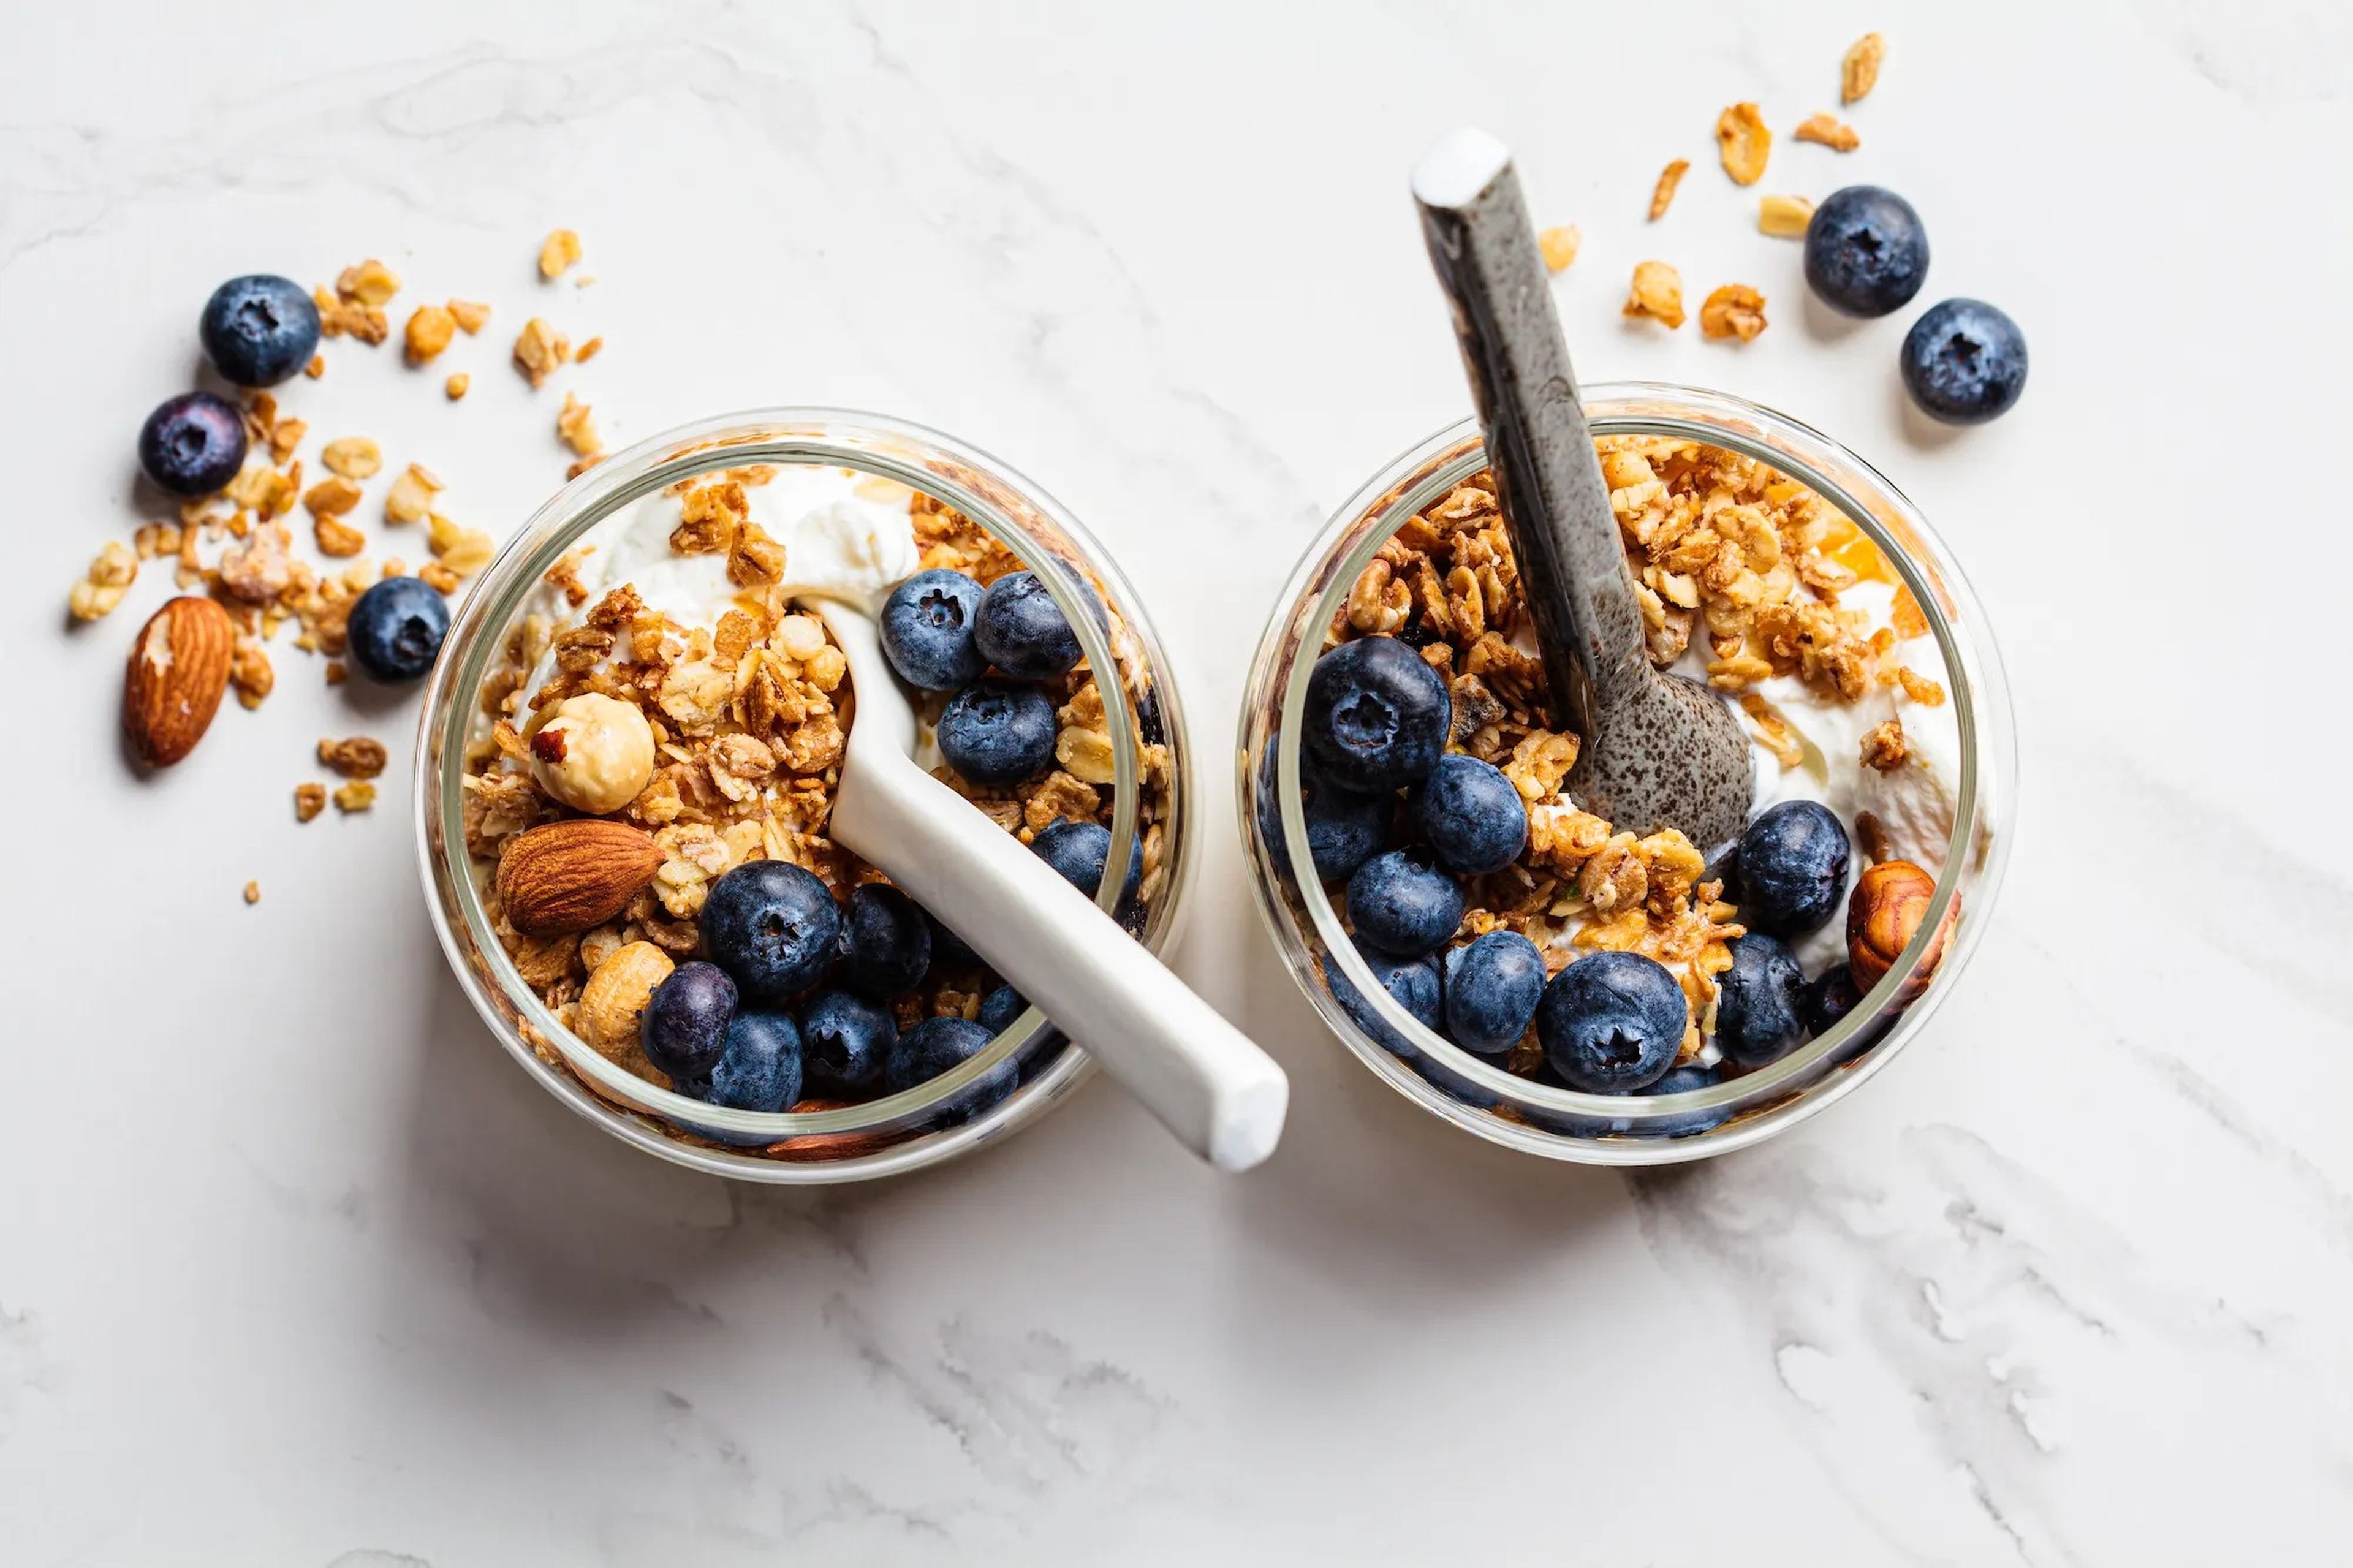 Yogurt with granola, nuts, and fruit